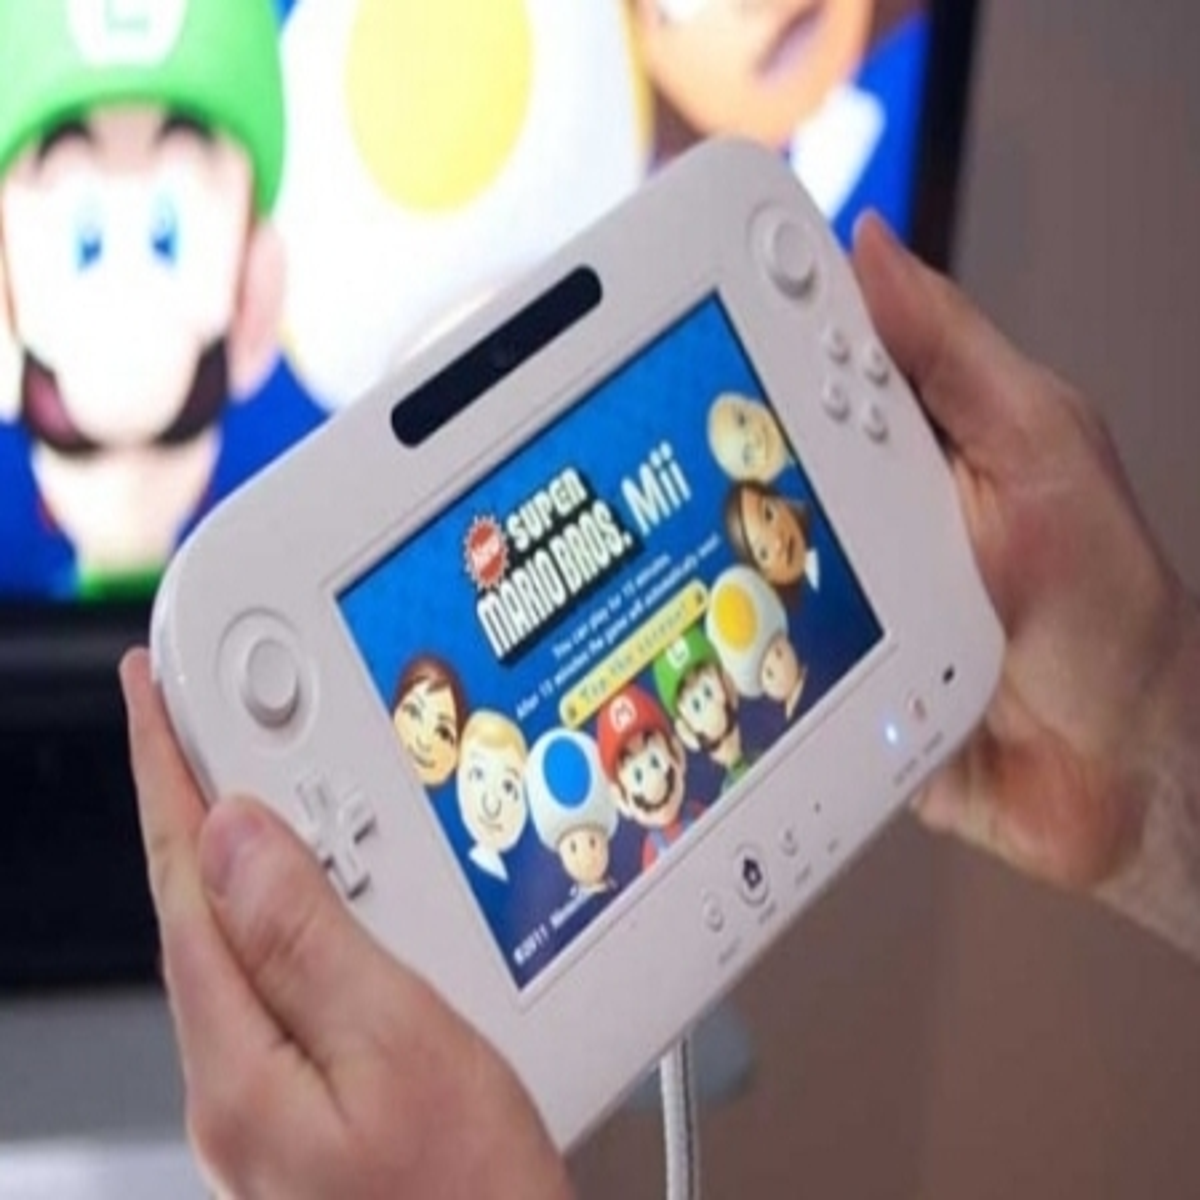 Wii U sneak peek: Nintendo rolling out 5,000 retail kiosks in buildup to  launch – GeekWire